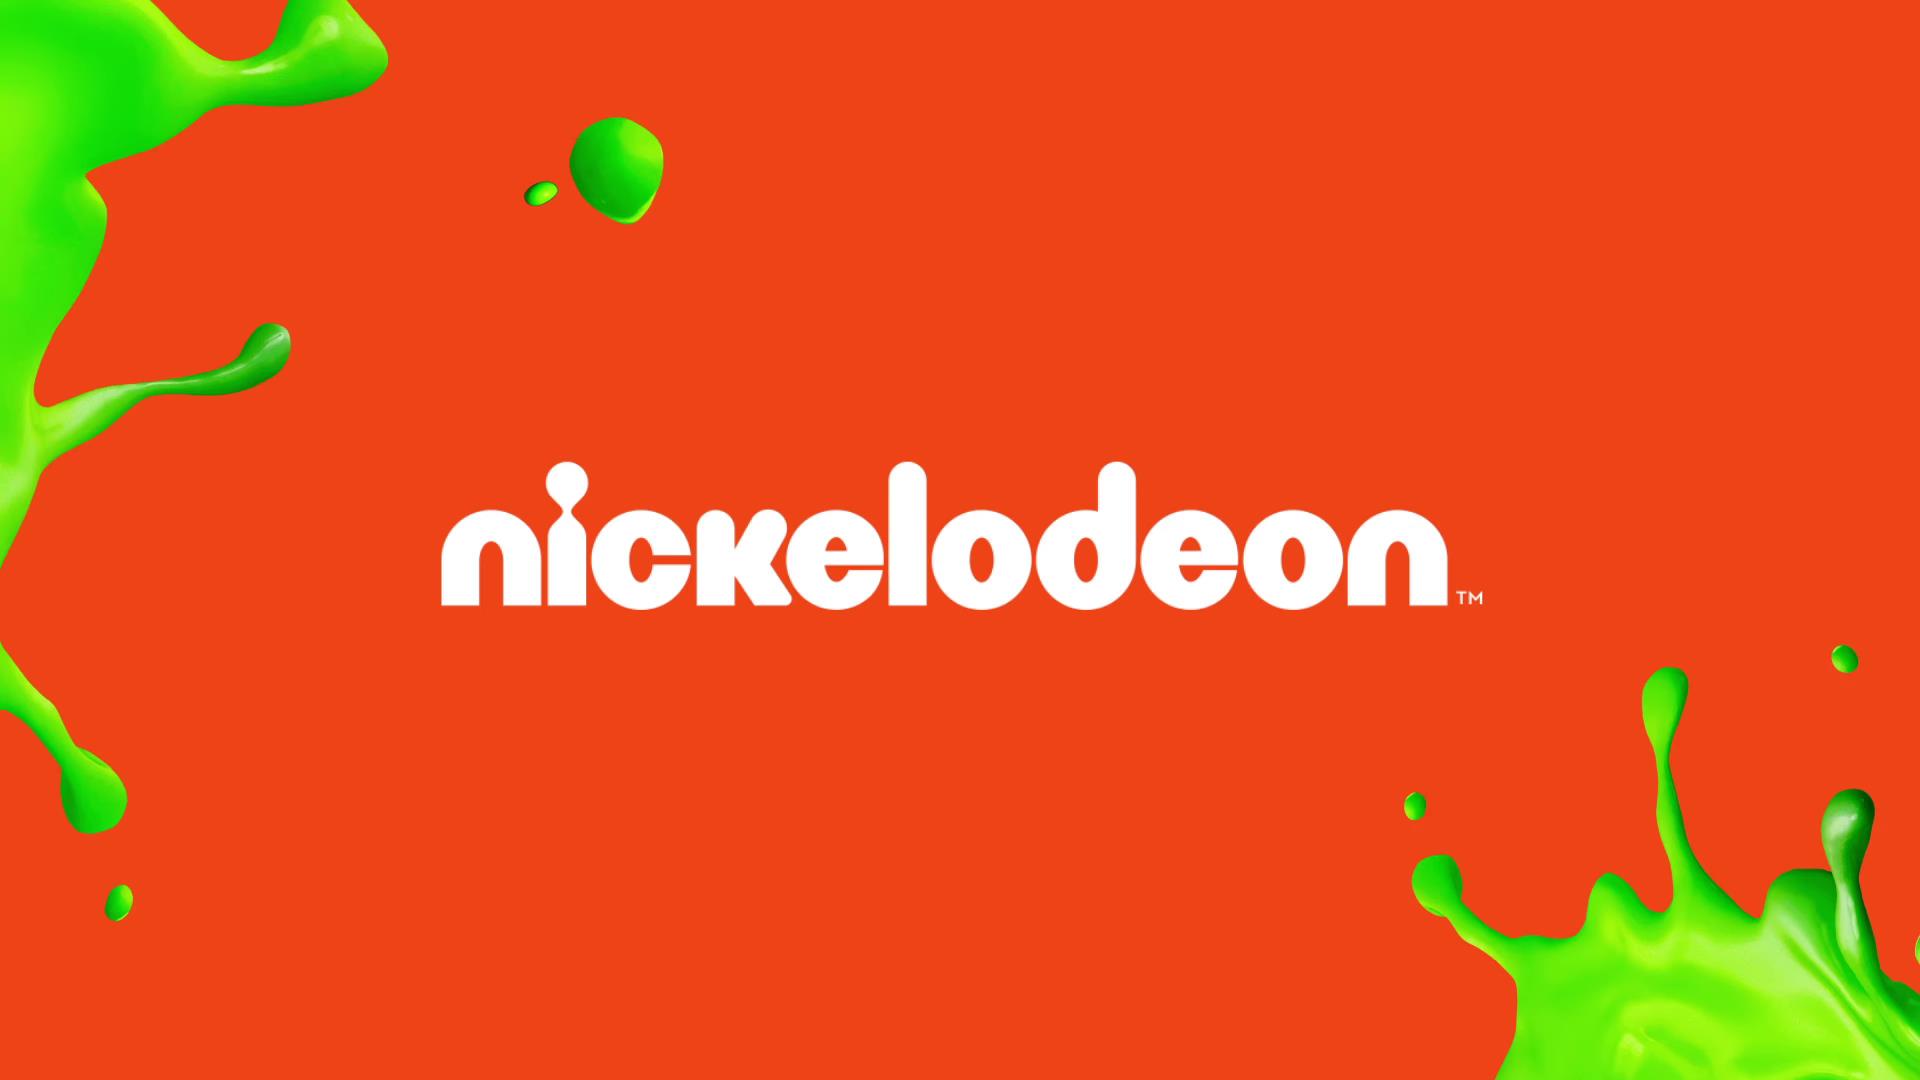 Телеканал никелодеон. Канал Nickelodeon. Nickelodeon логотип. Заставка Никелодеон.